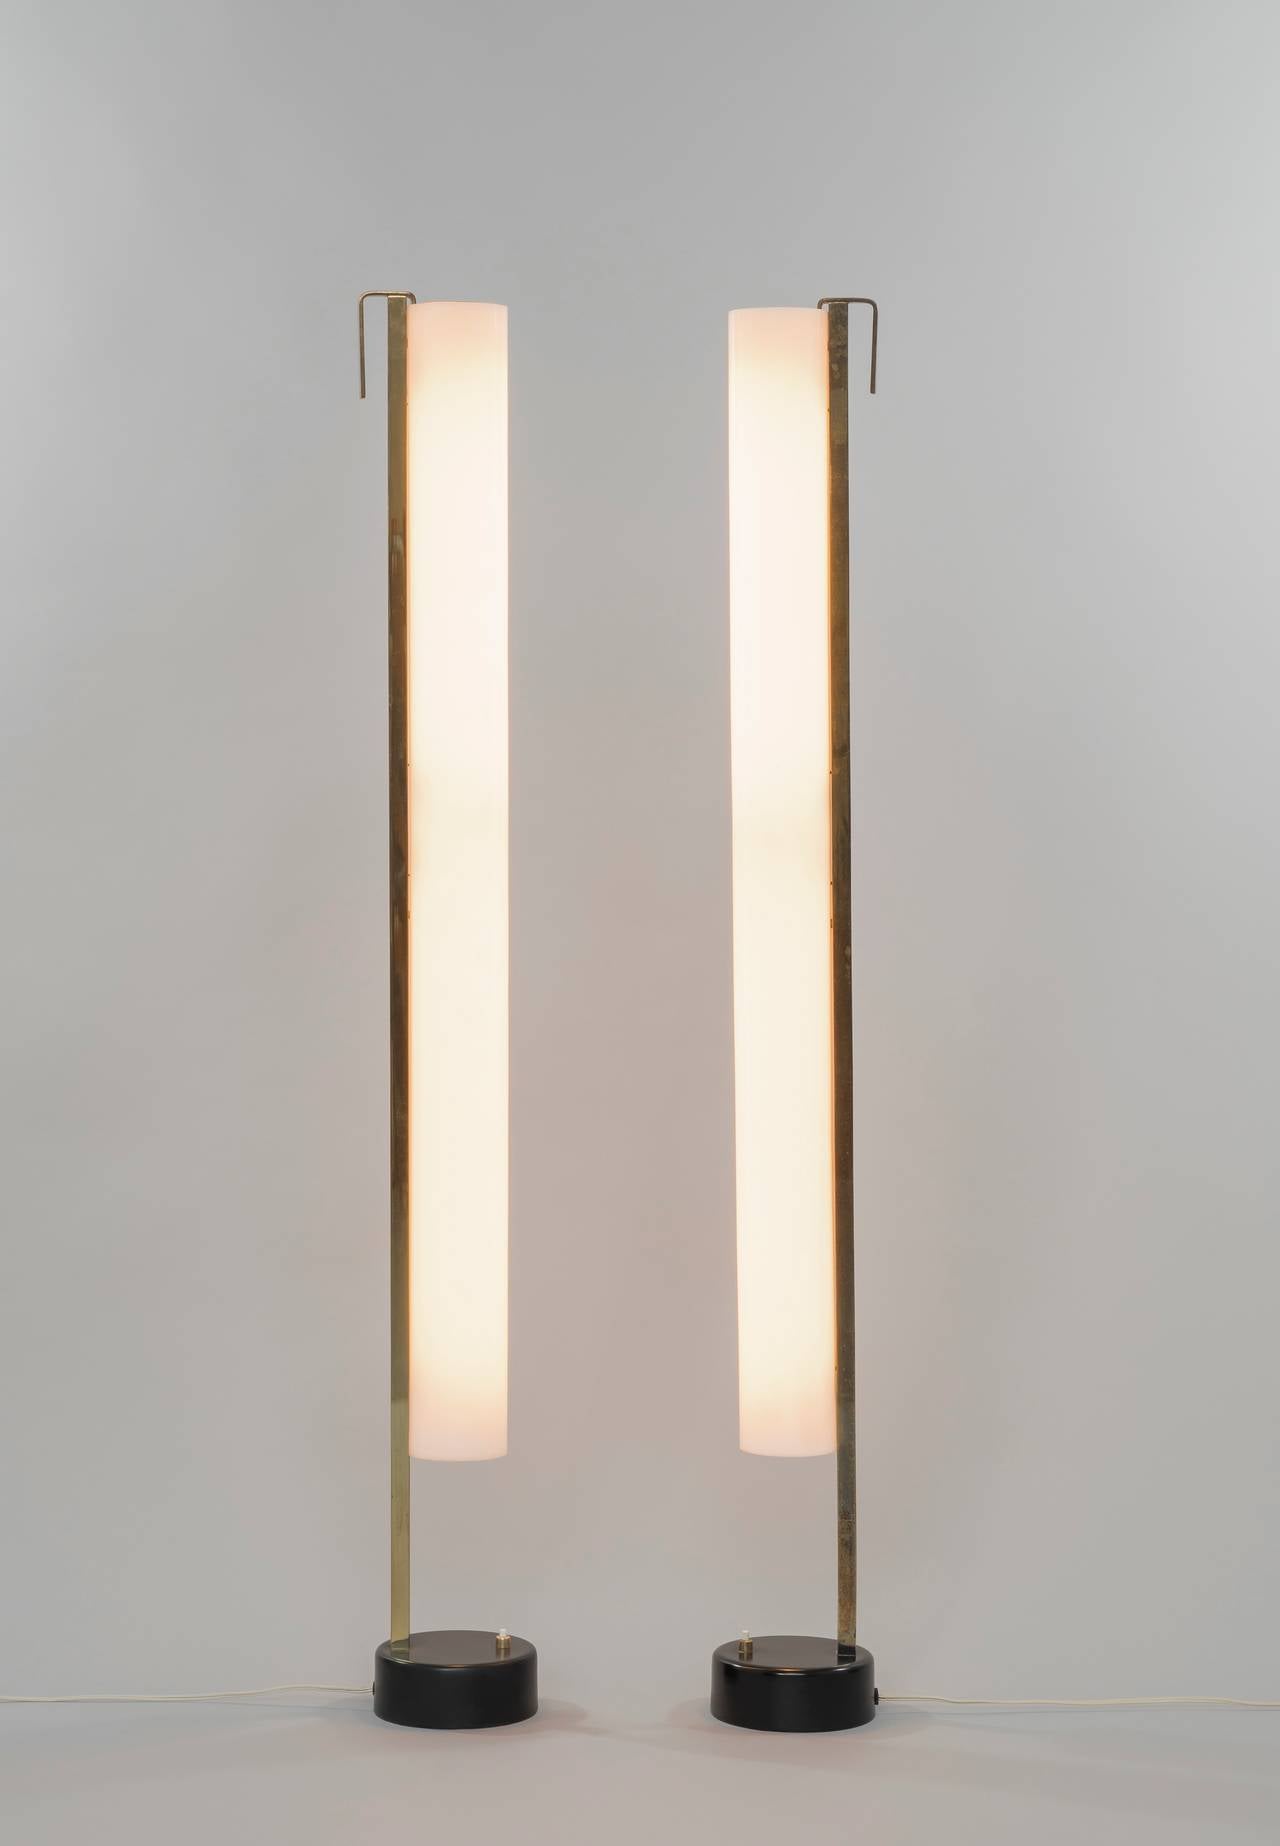 Pair of floor lamps G54 by Pierre Guariche (1926)1995)
Pierre Disderot edition - 1959